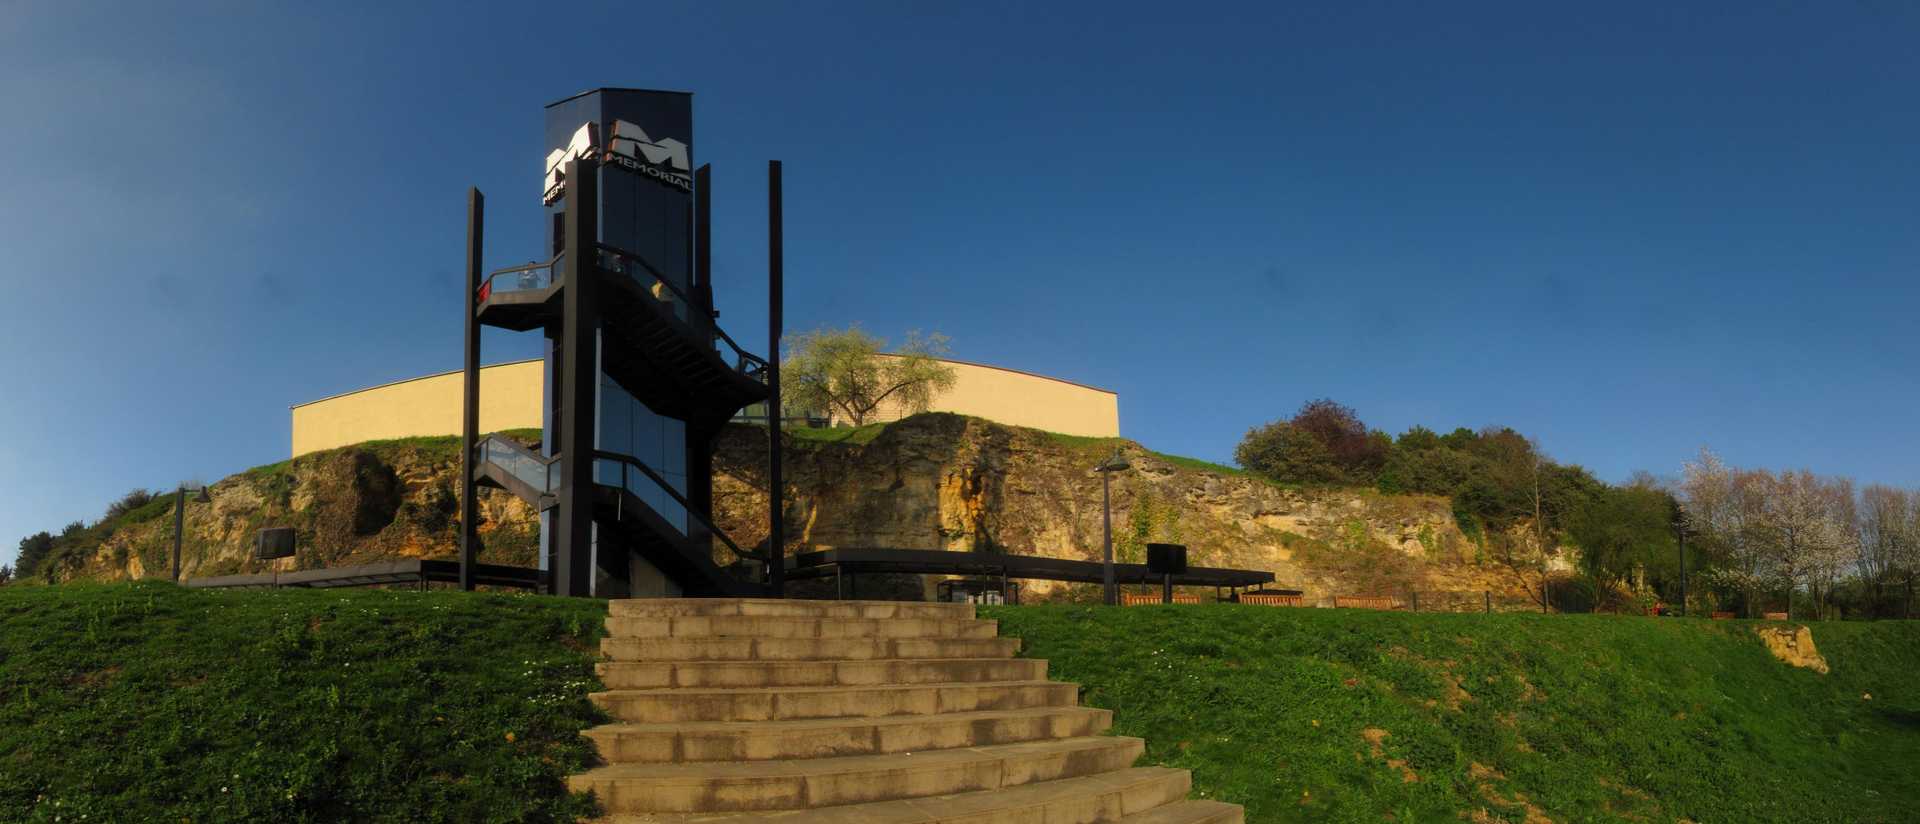 The war memorial and museum in Caen